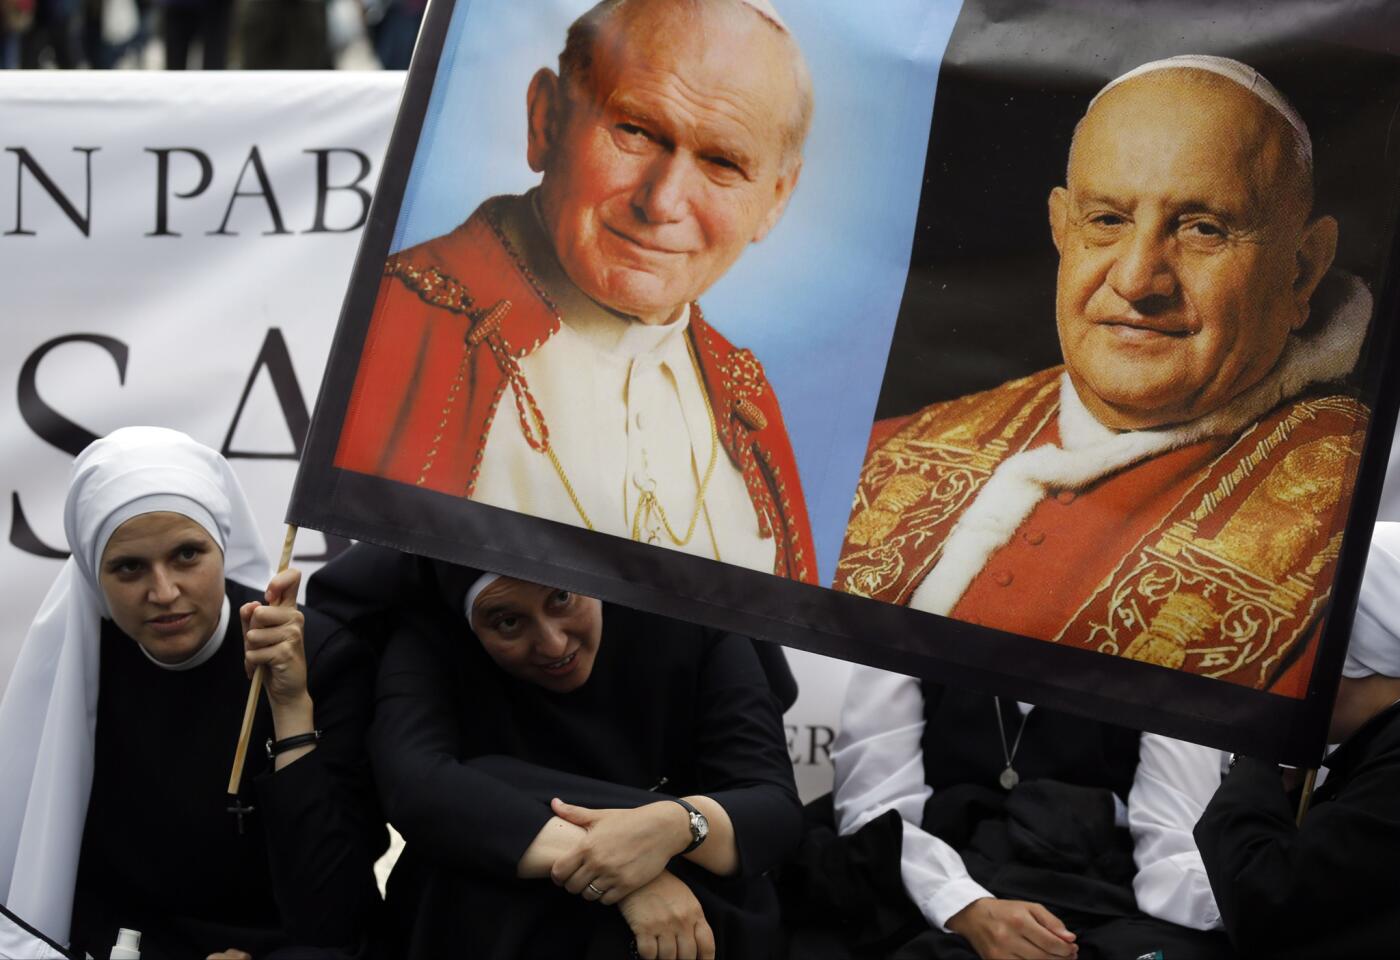 Pope Francis elevates John XXIII and John Paul II